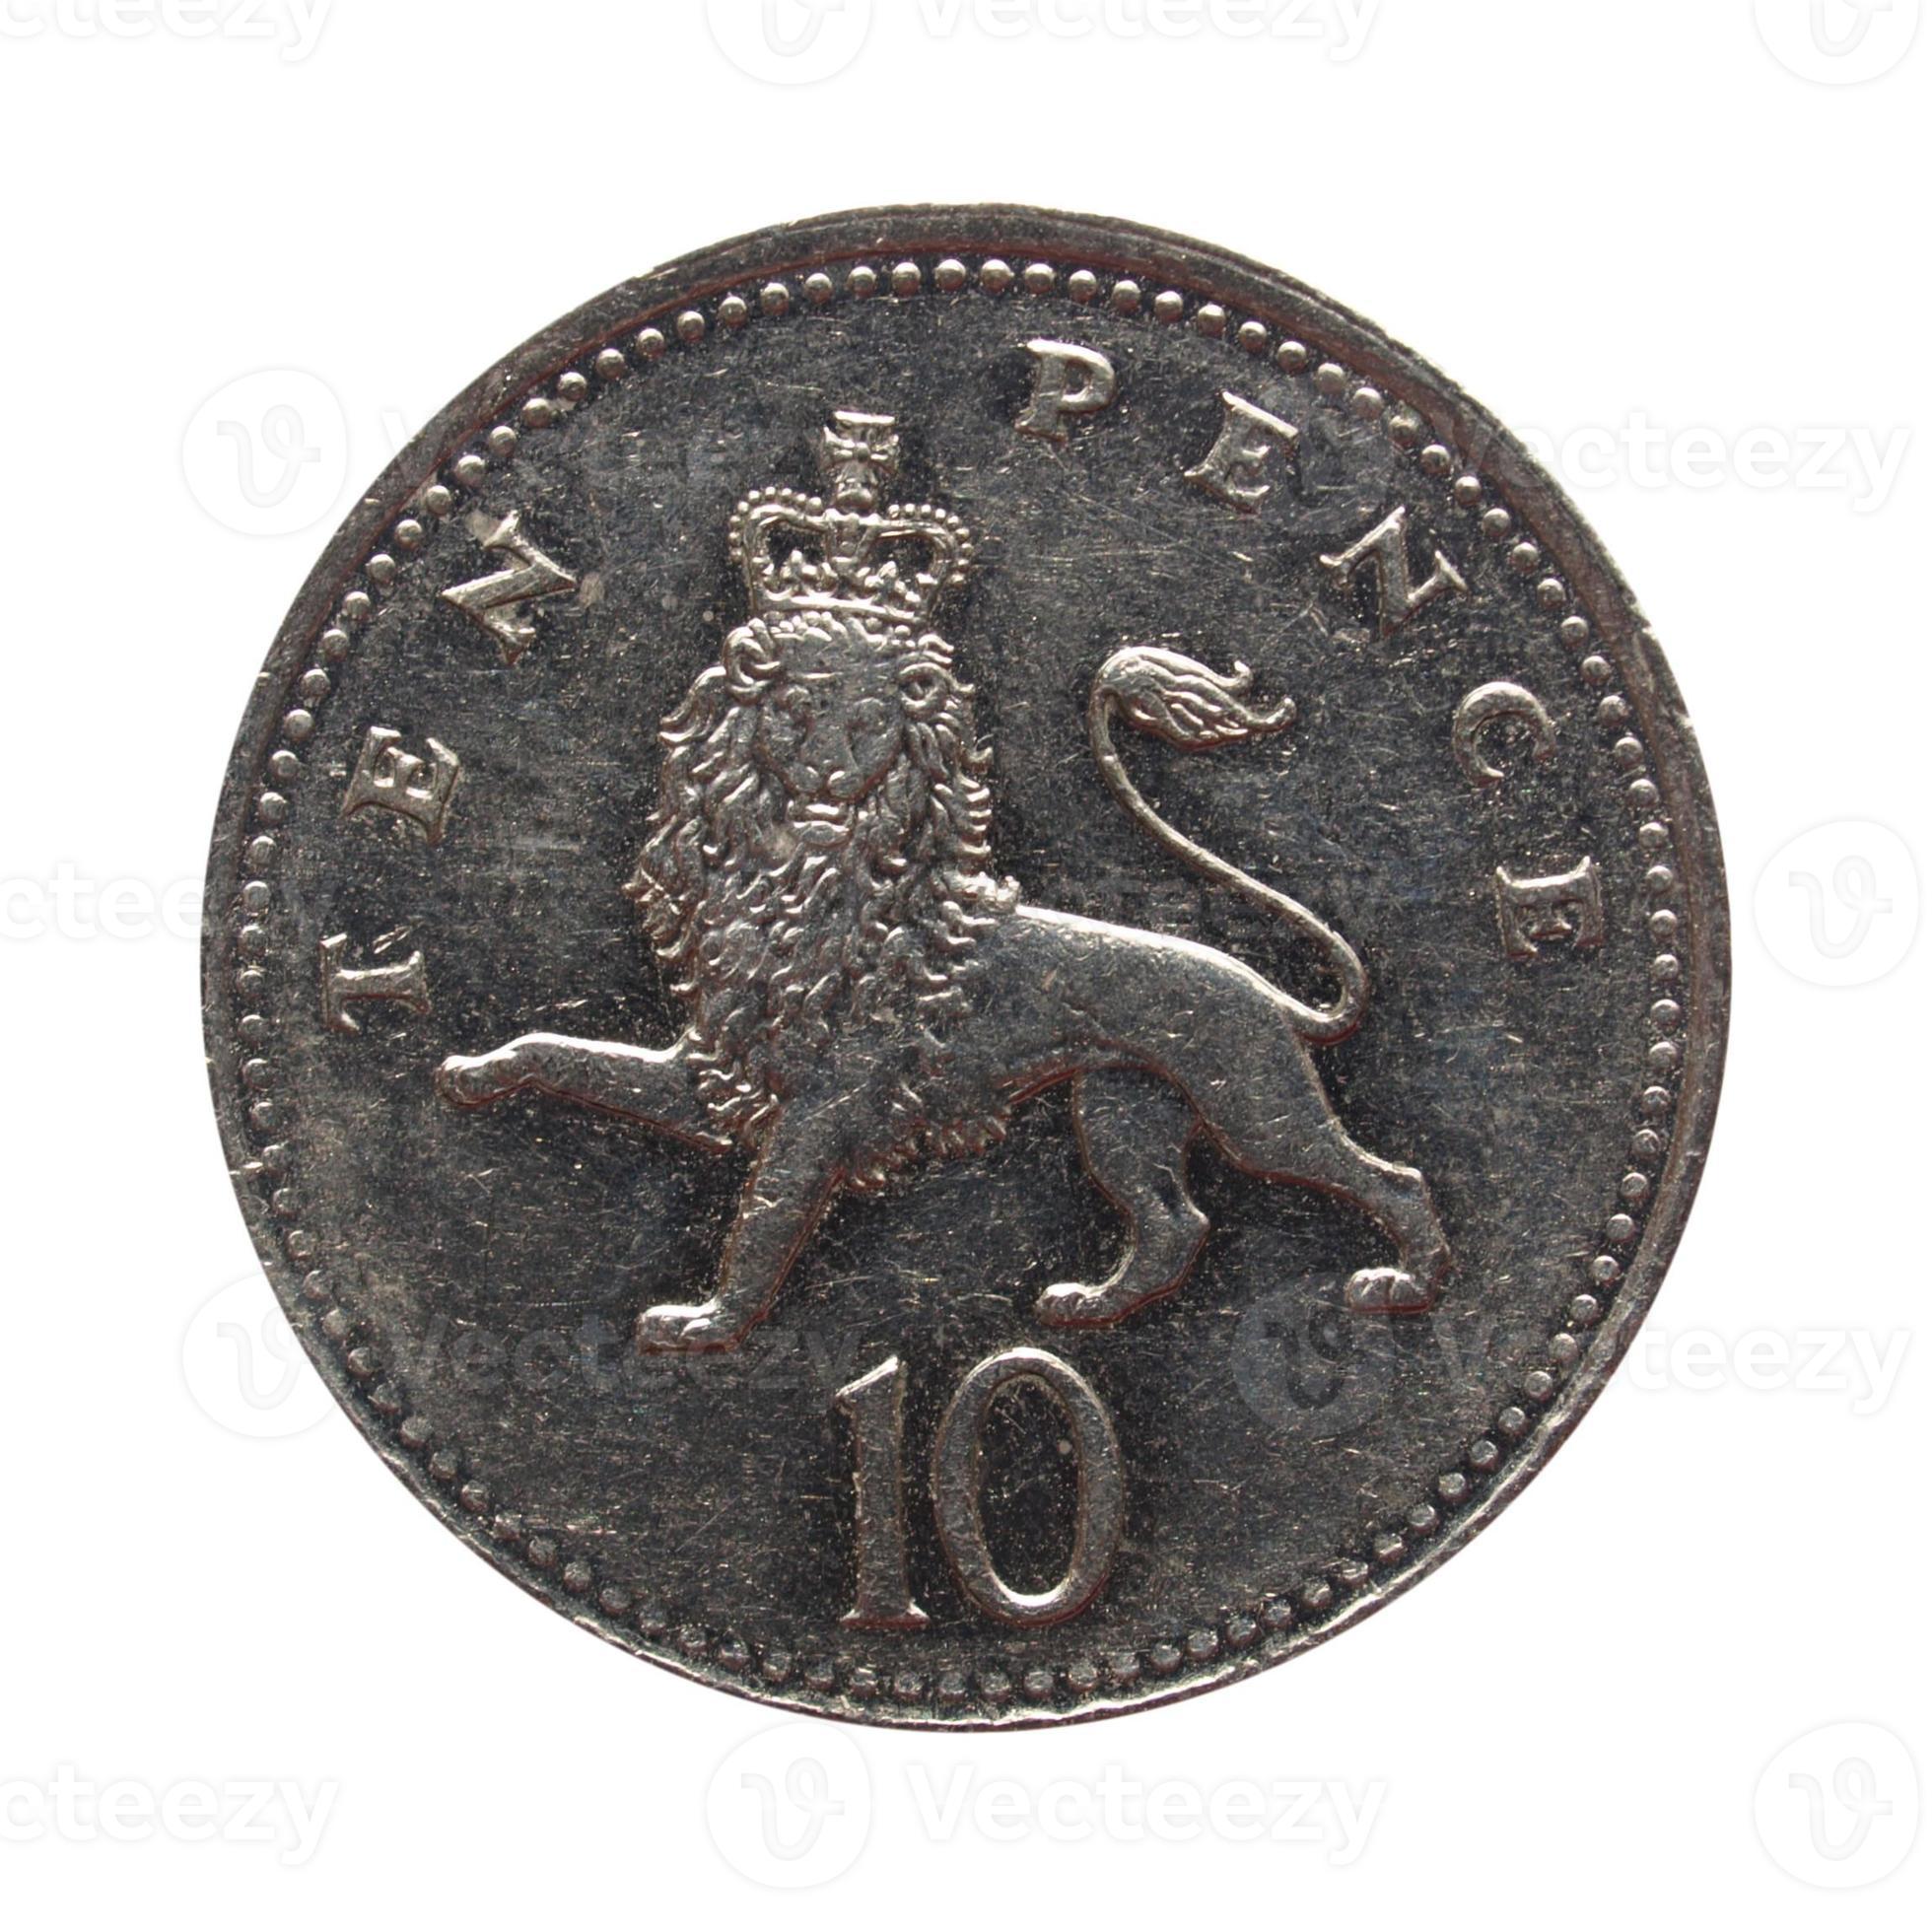 Moneda de 10 peniques, Reino Unido foto